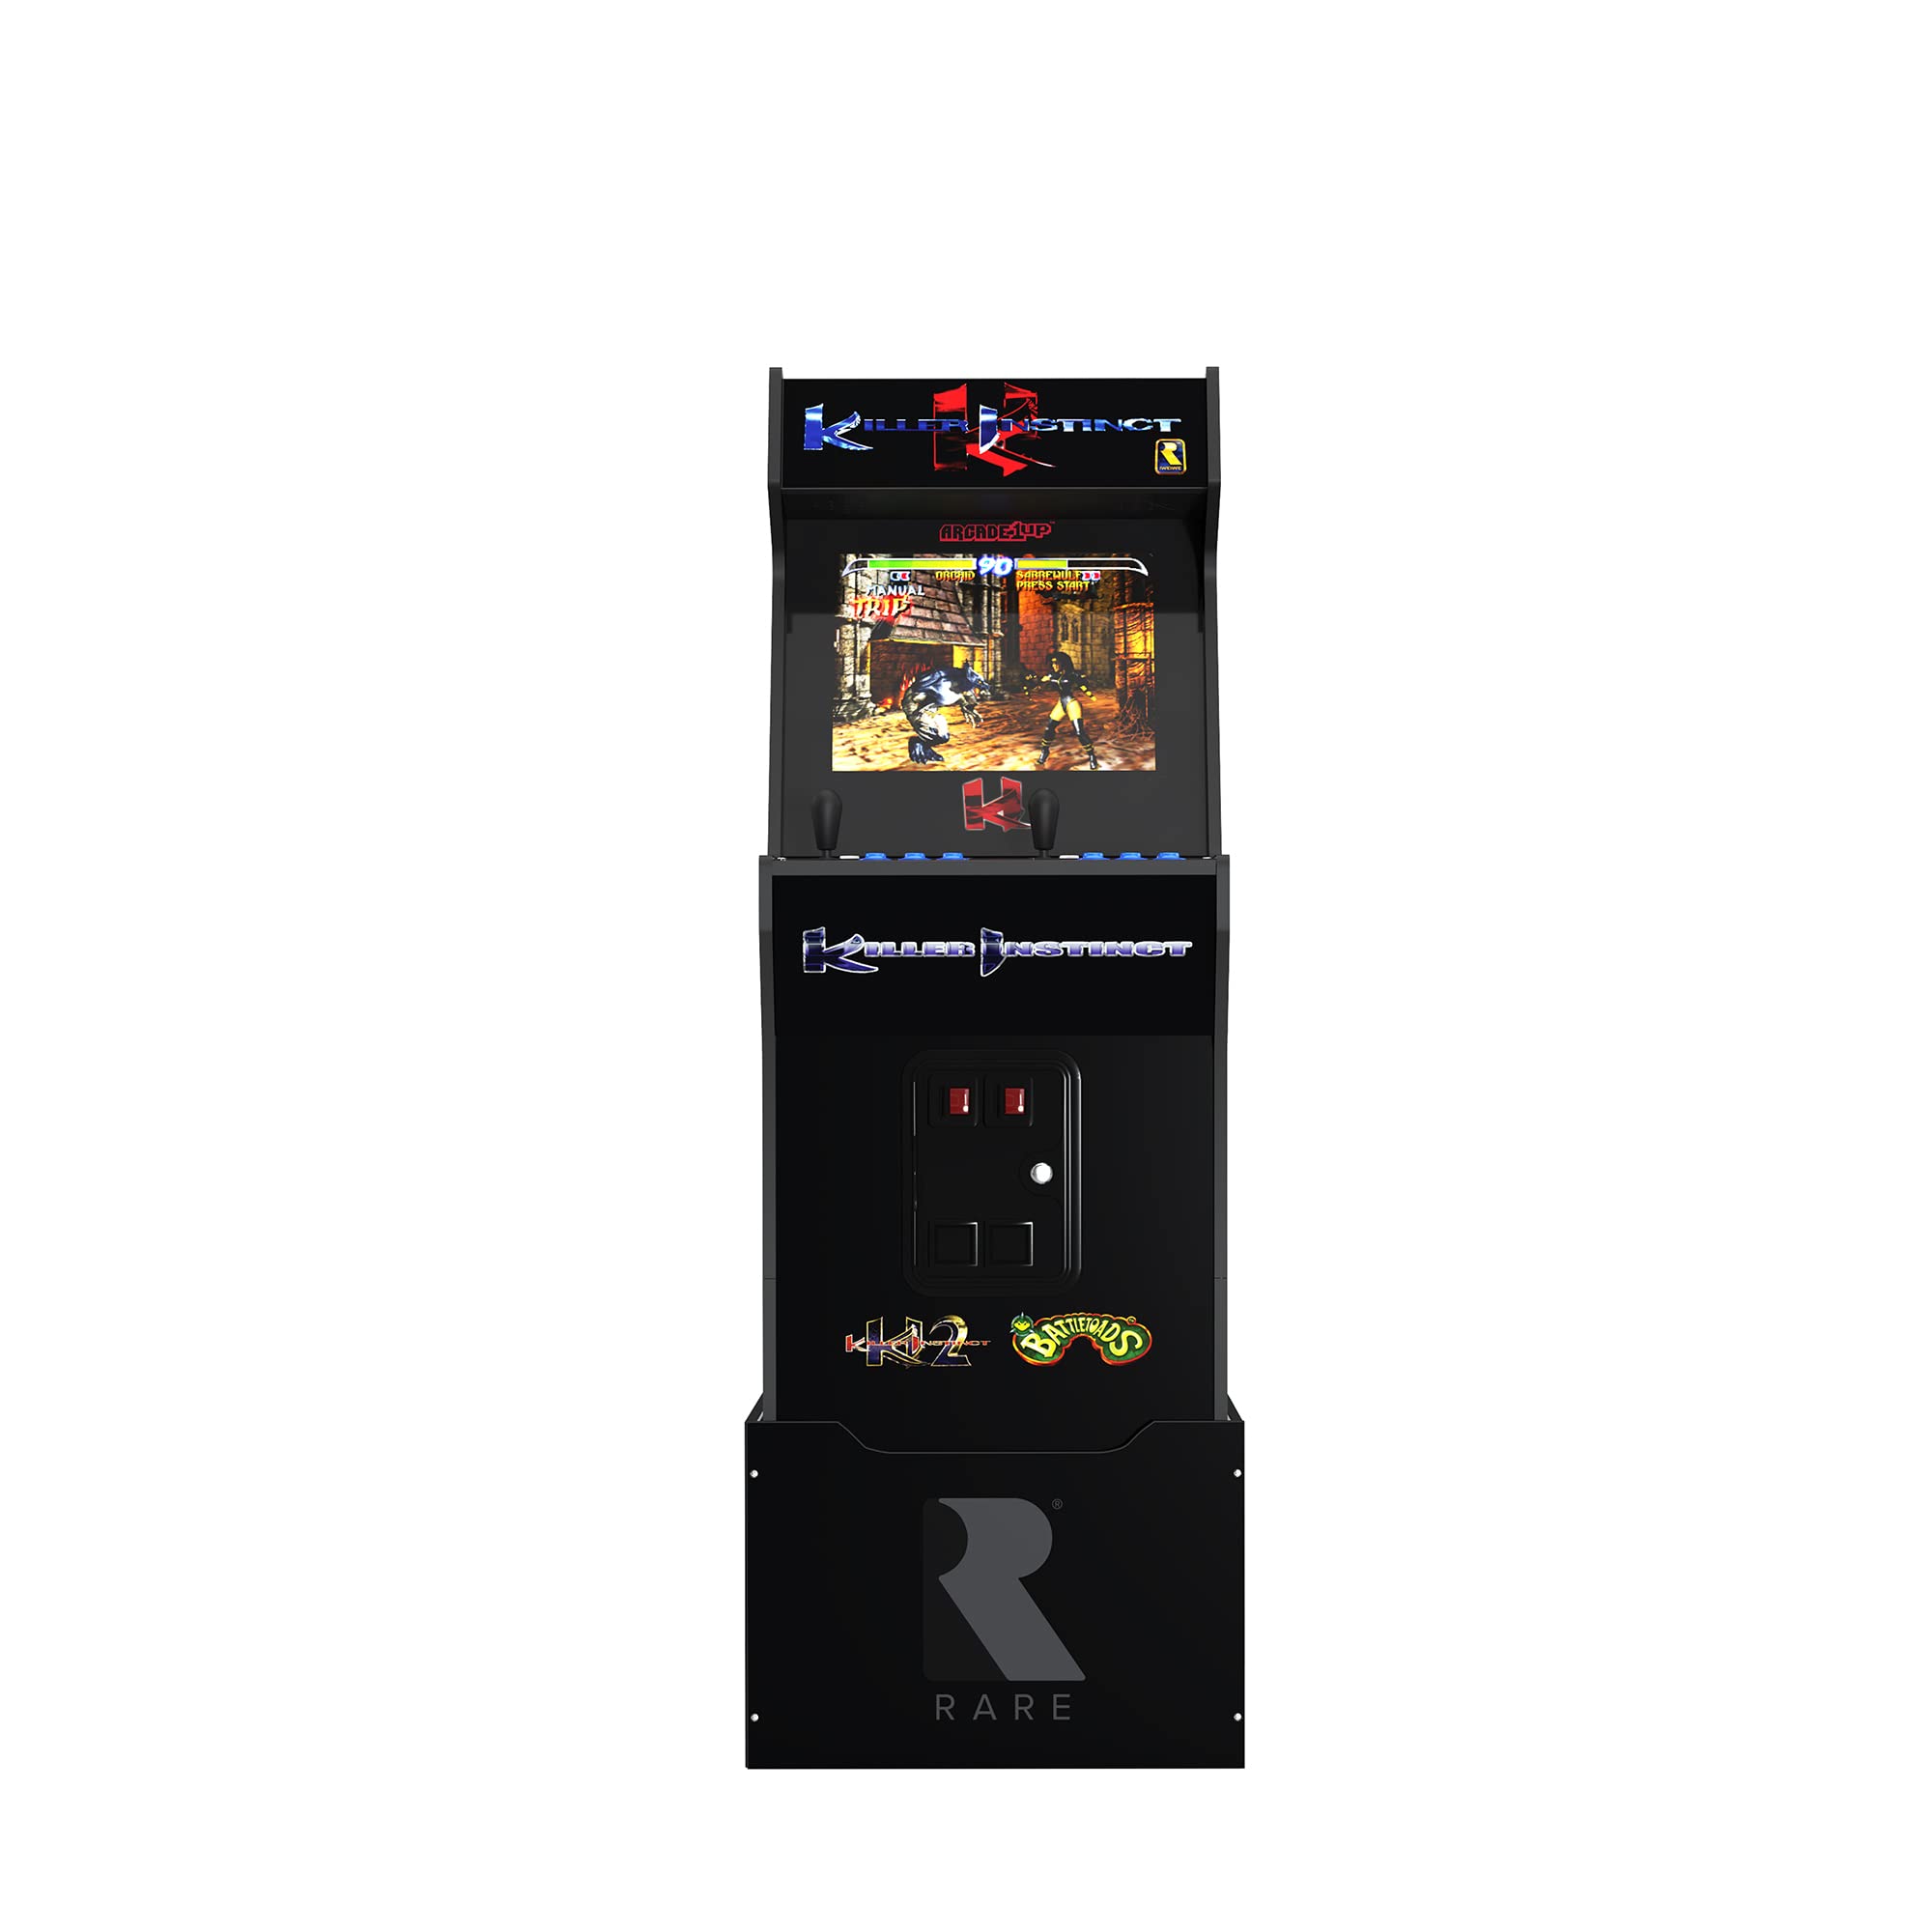 Arcade1Up Killer Instinct Arcade Machine with Riser and Stool